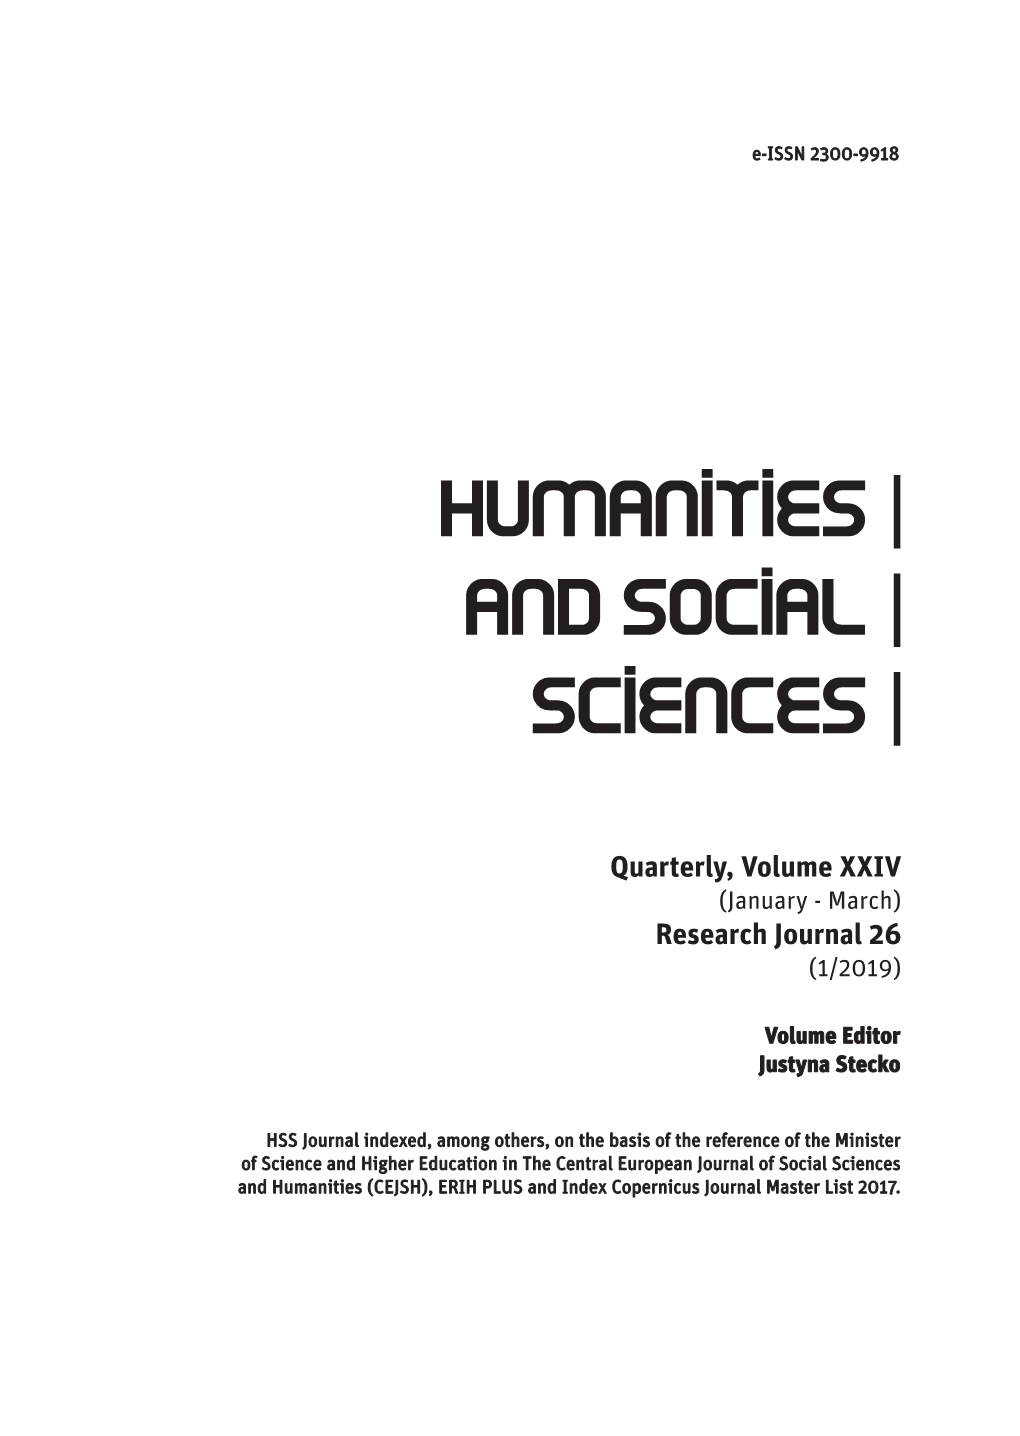 Quarterly, Volume XXIV Research Journal 26